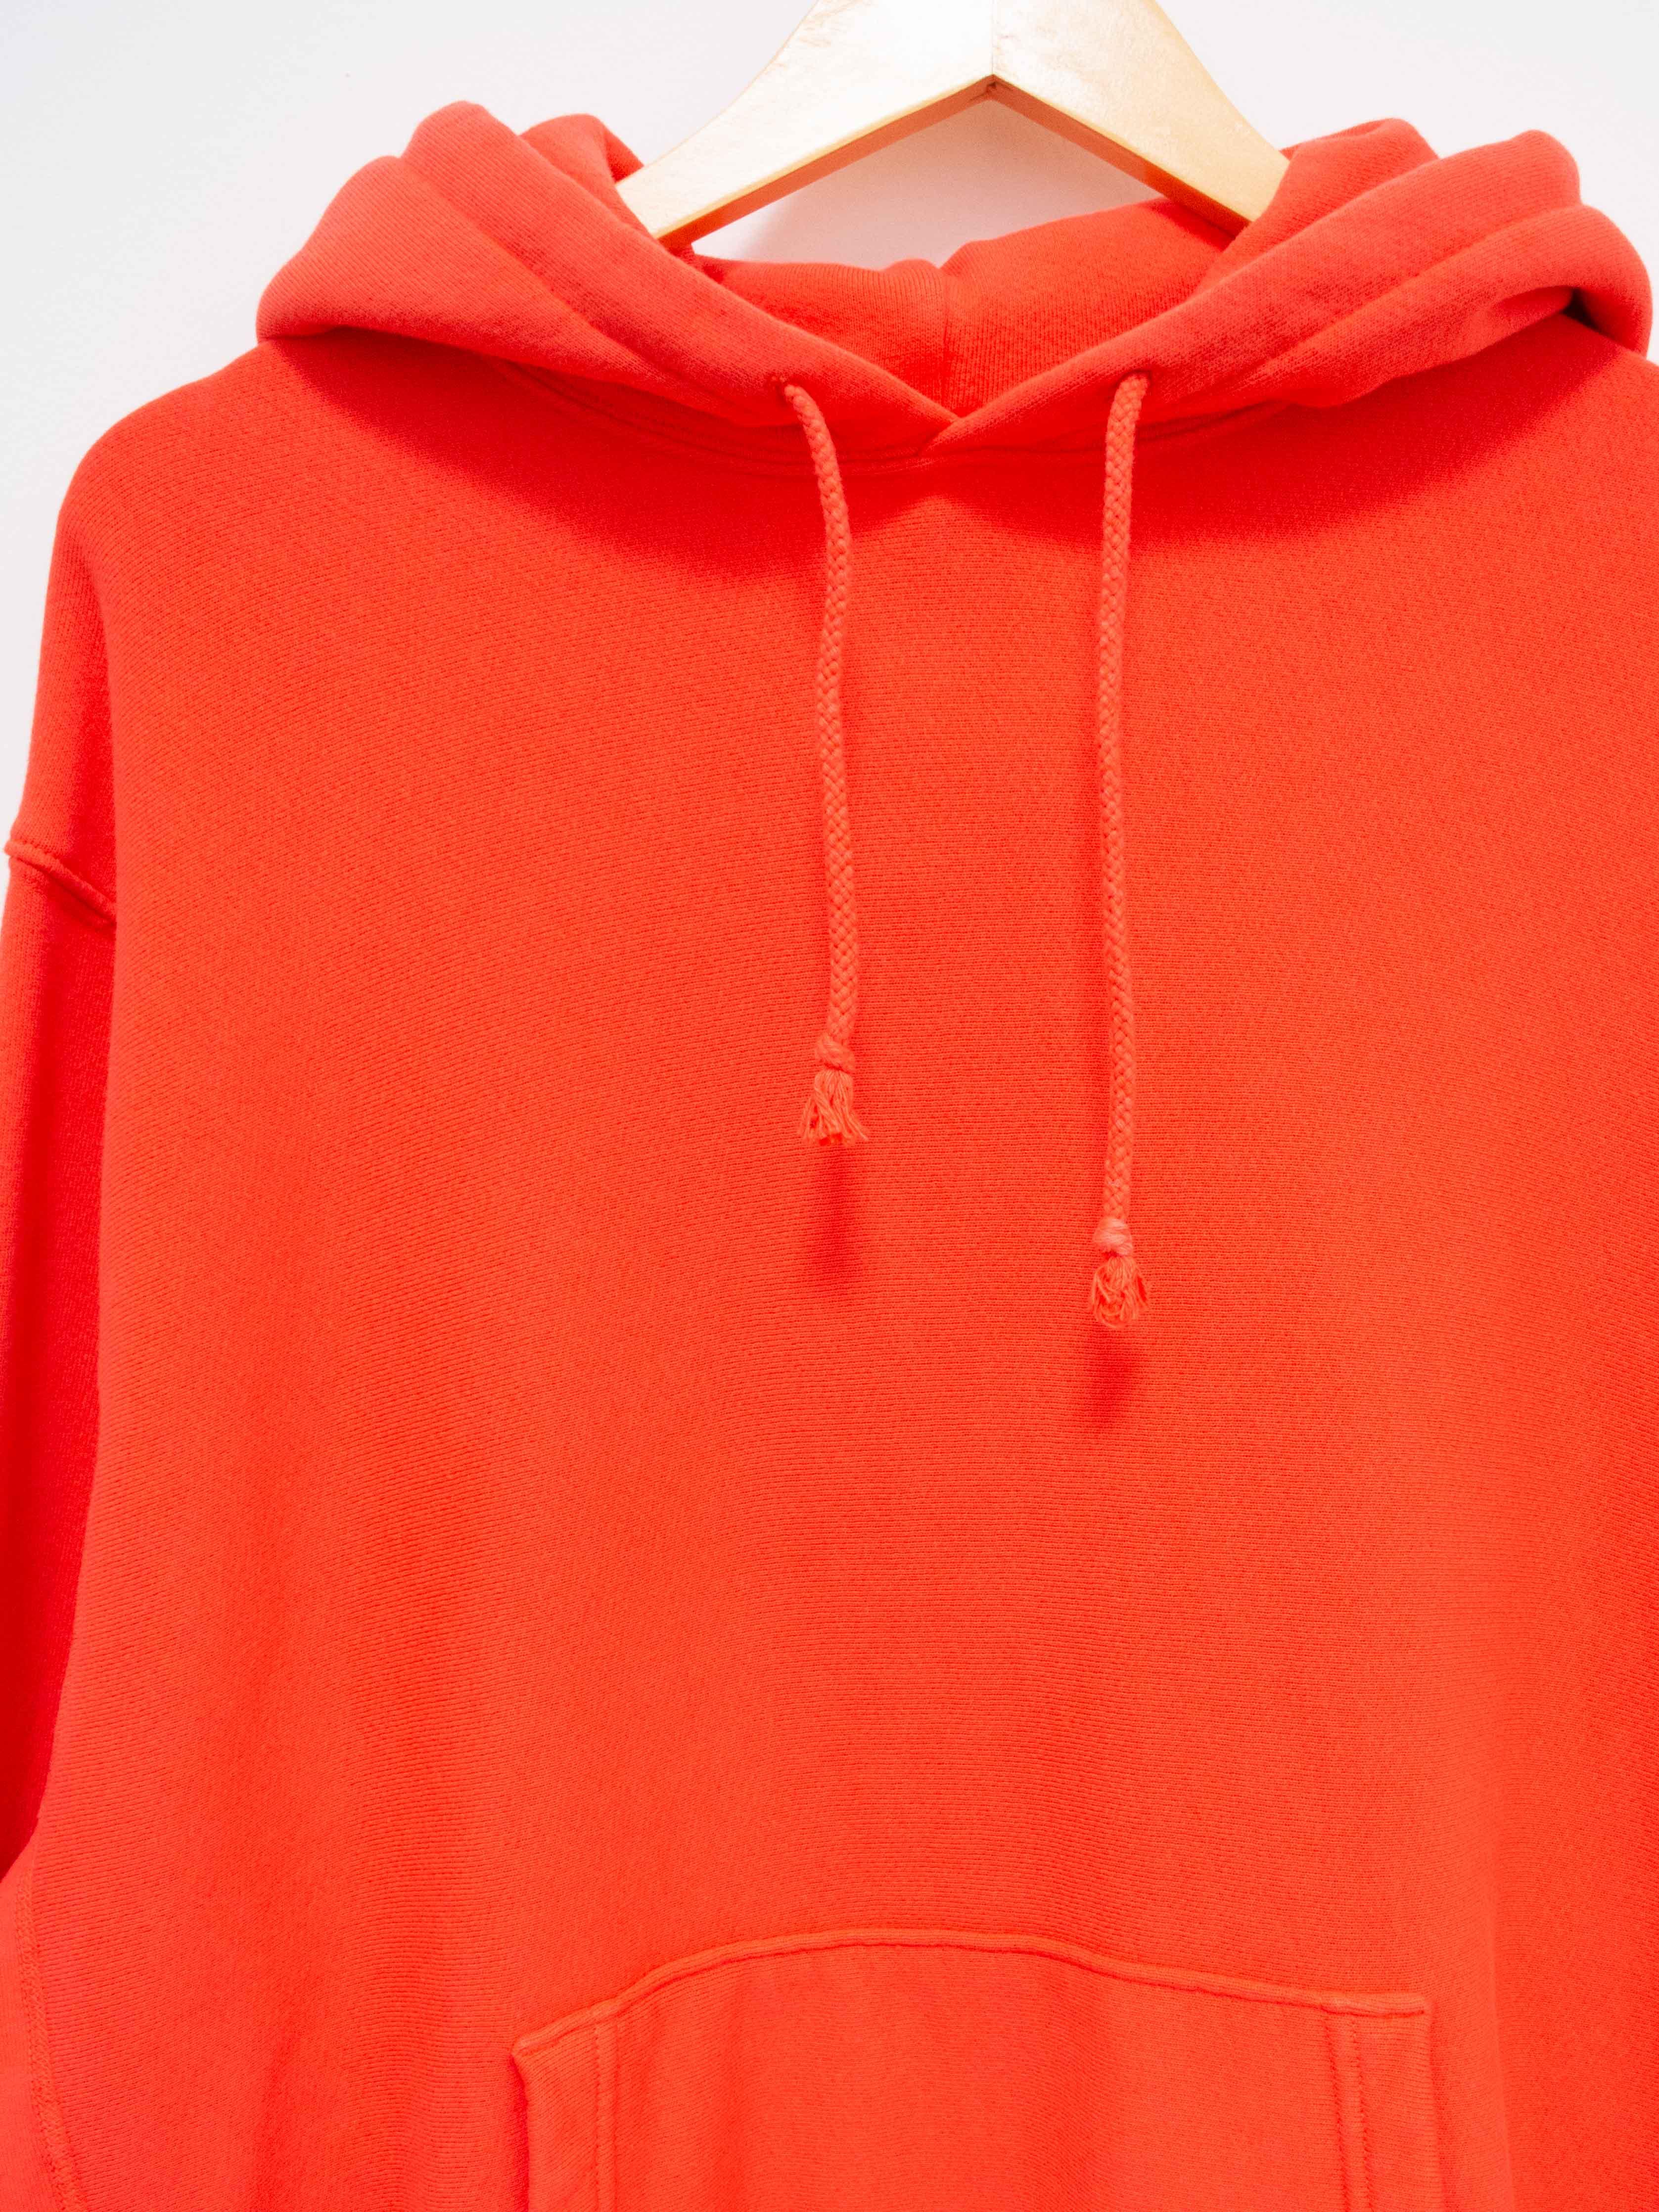 Namu Shop - paa Hooded Pullover Sweatshirt - Red Orange